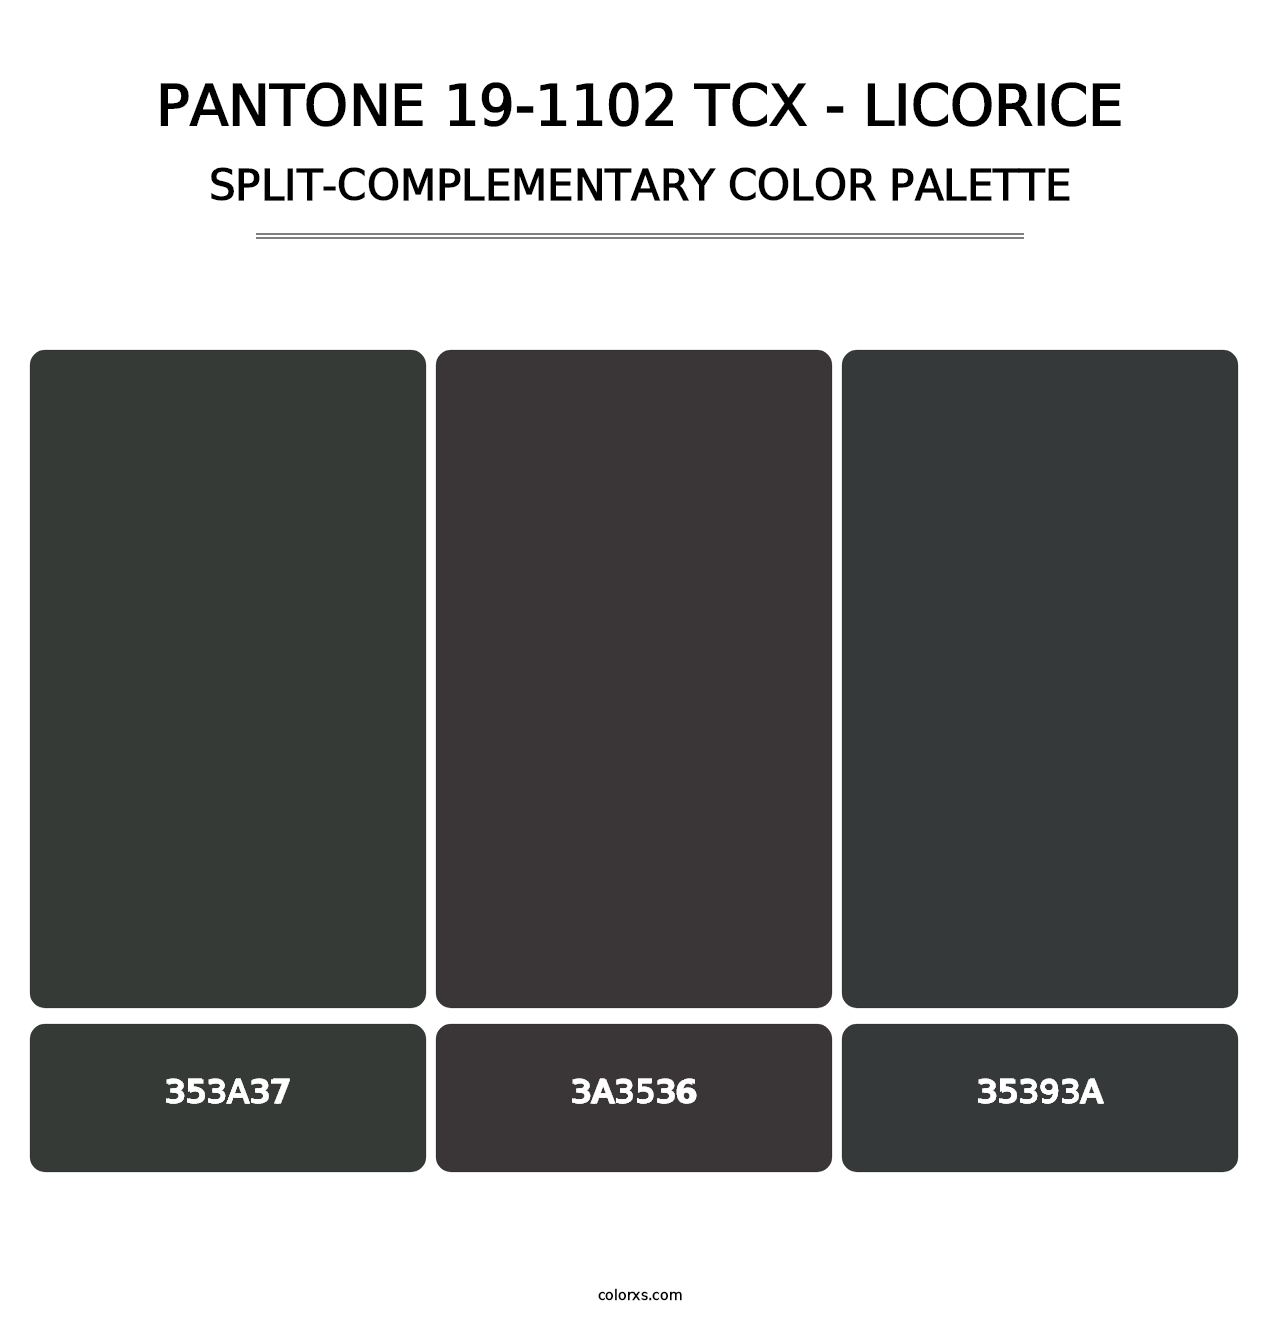 PANTONE 19-1102 TCX - Licorice - Split-Complementary Color Palette